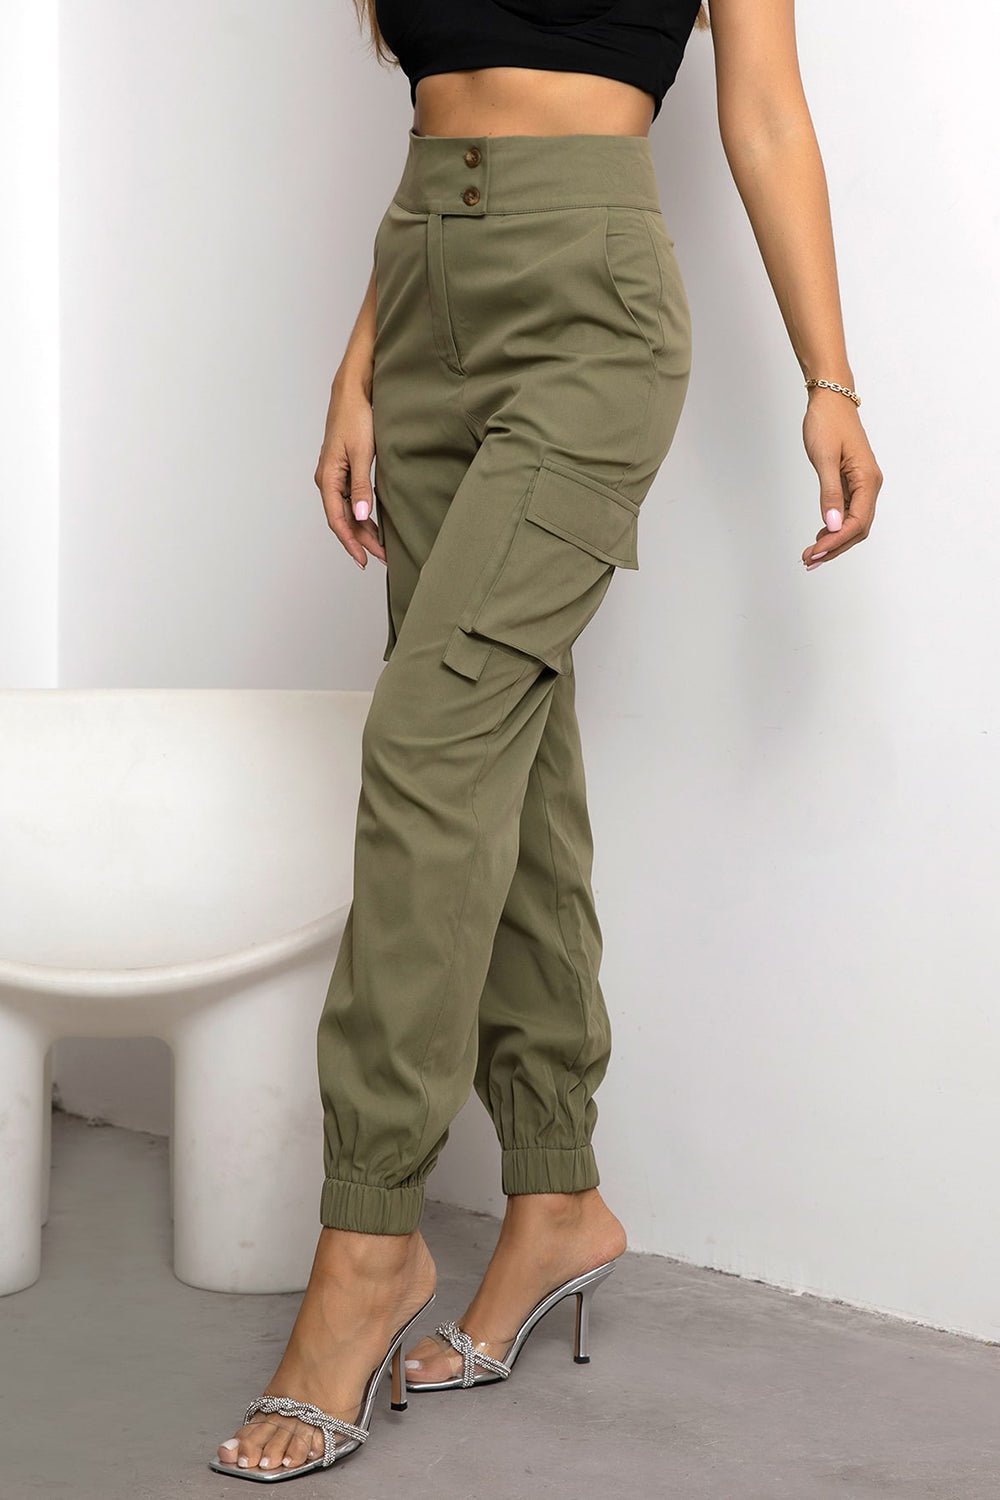 High Waist Cargo Pants - Fashion Girl Online Store